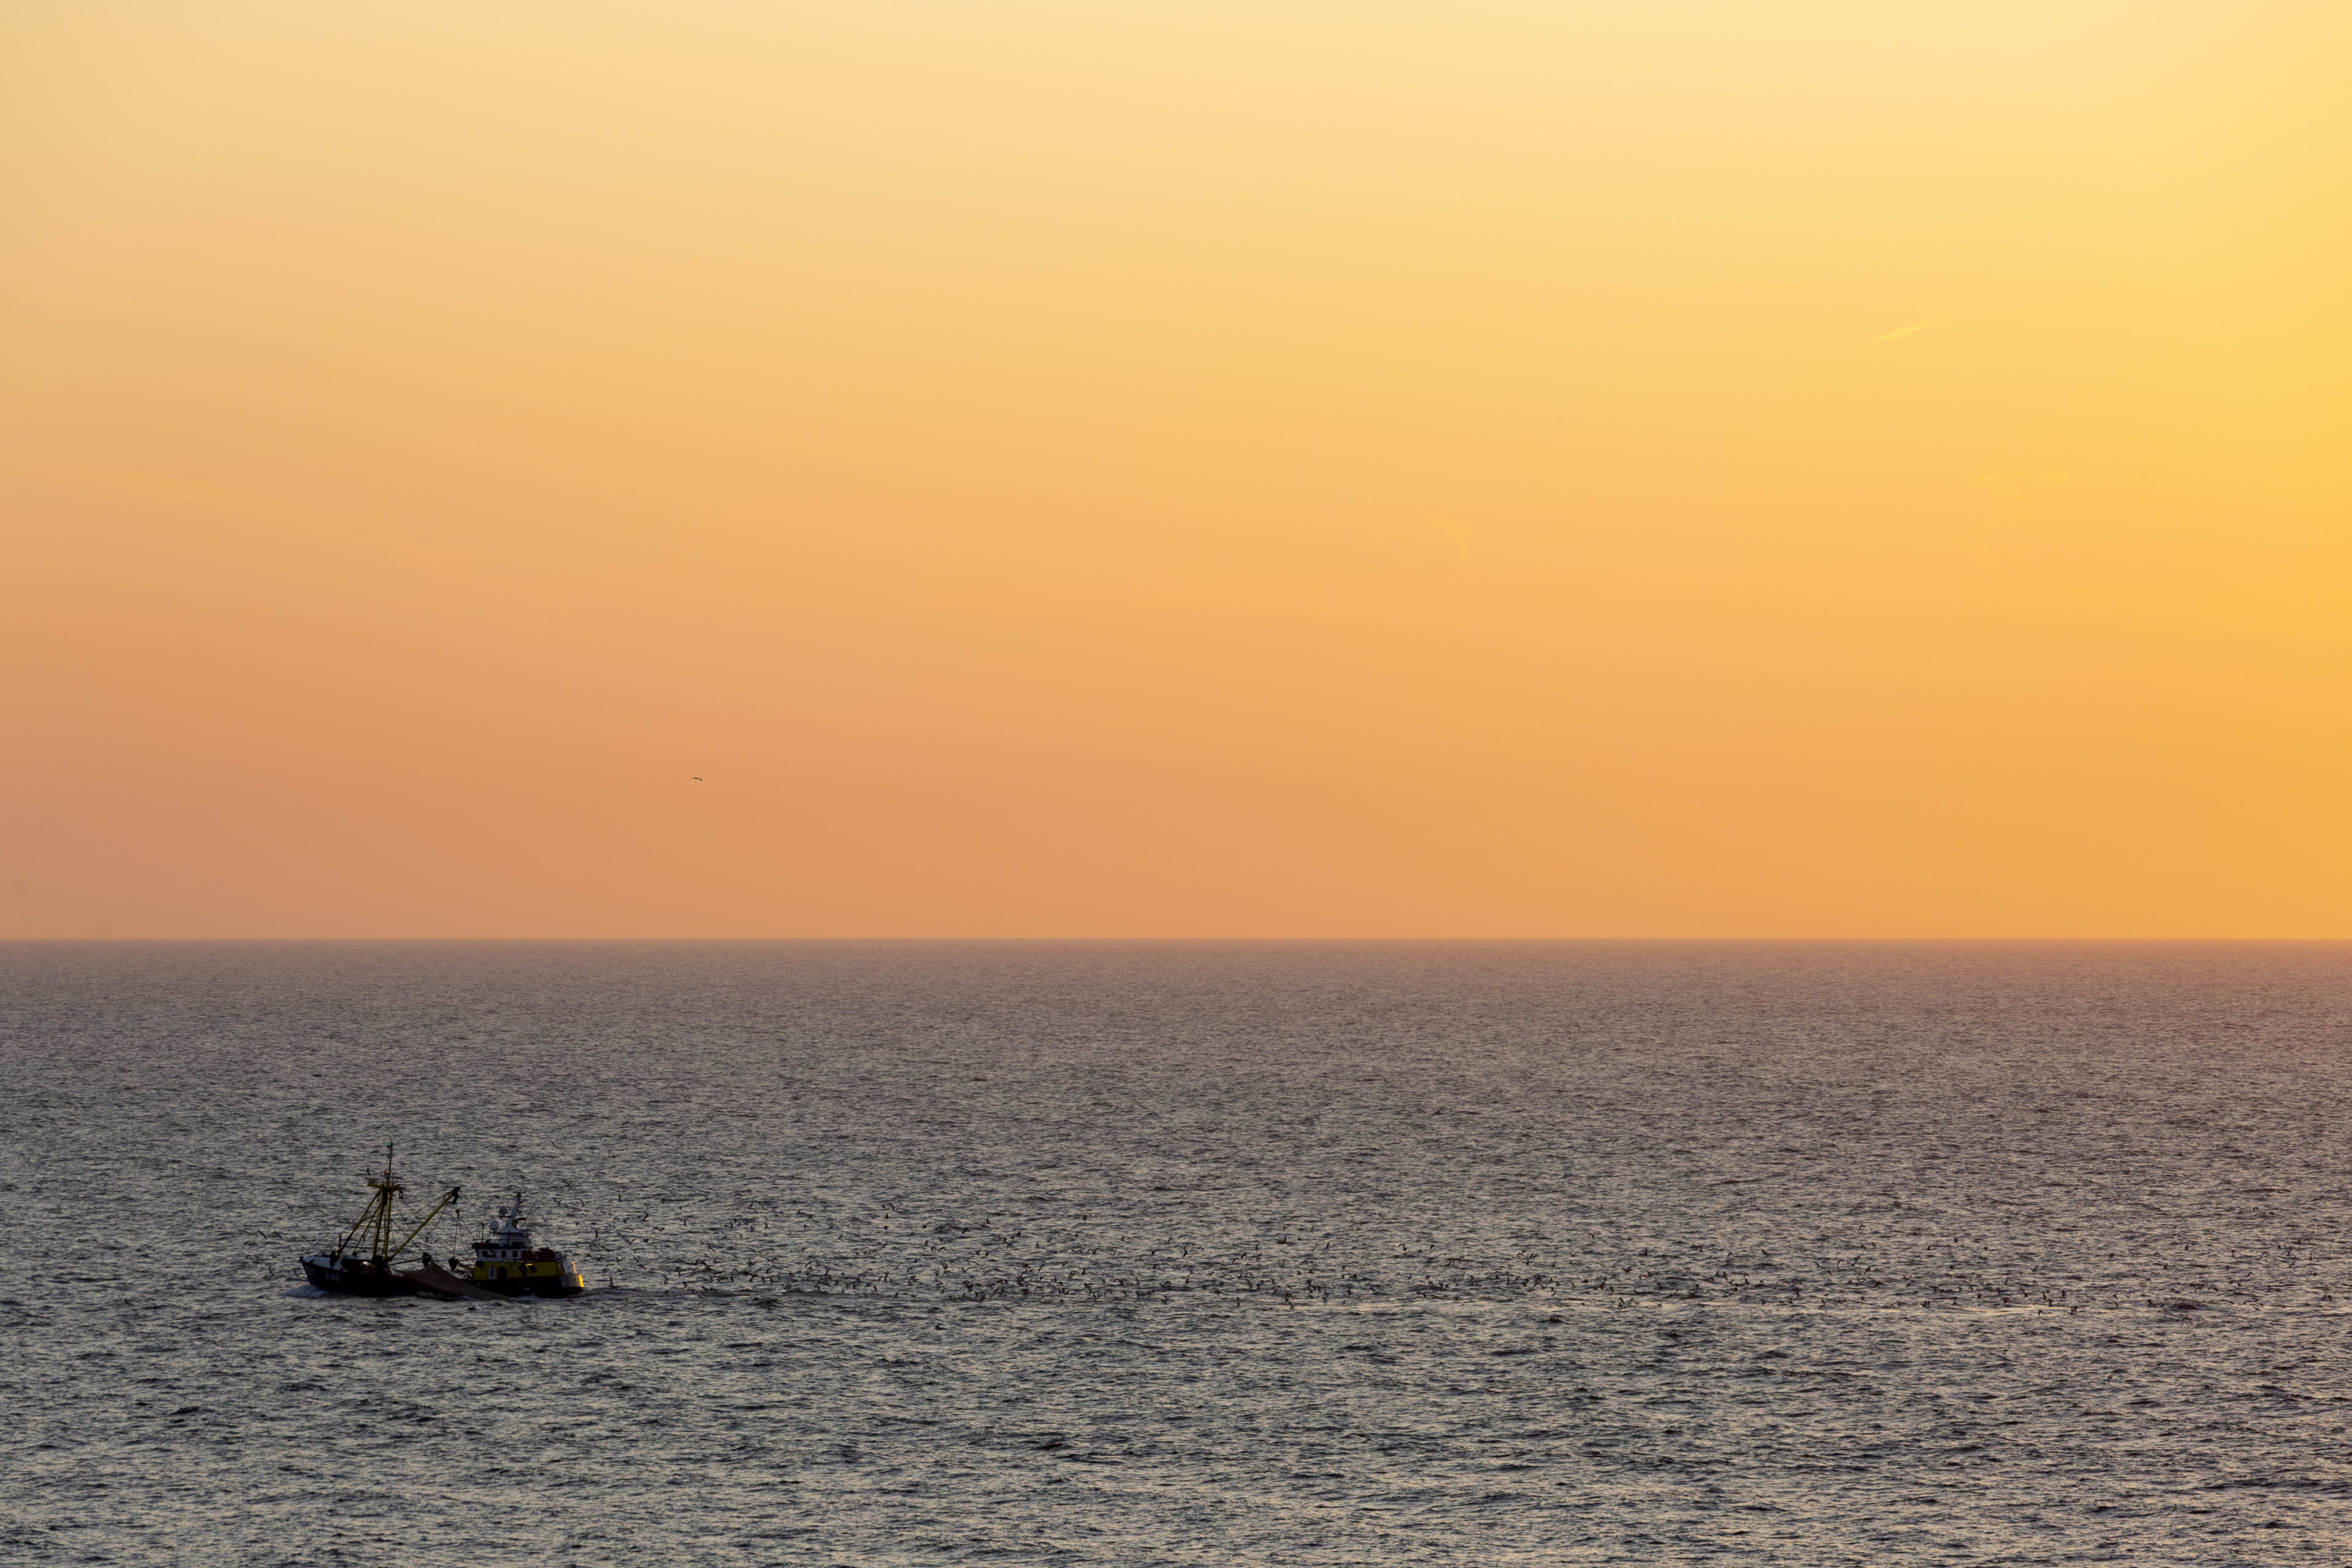 Urker viskotter gezonken voor de Franse kust, bemanning is gered